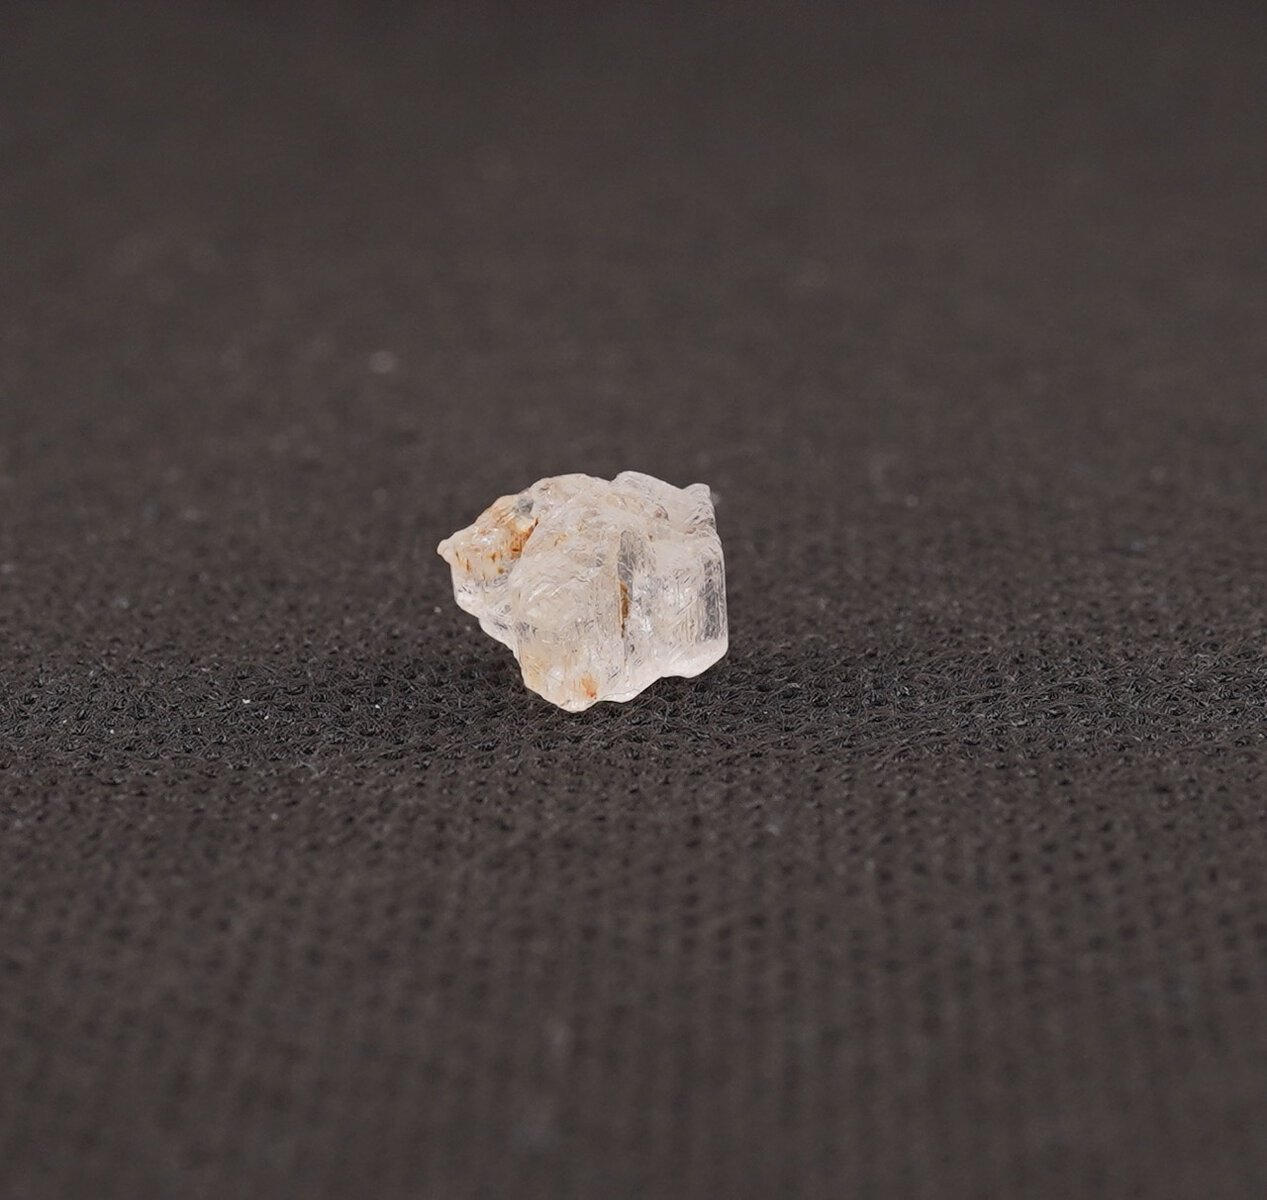 Fenacit nigerian cristal natural unicat f300